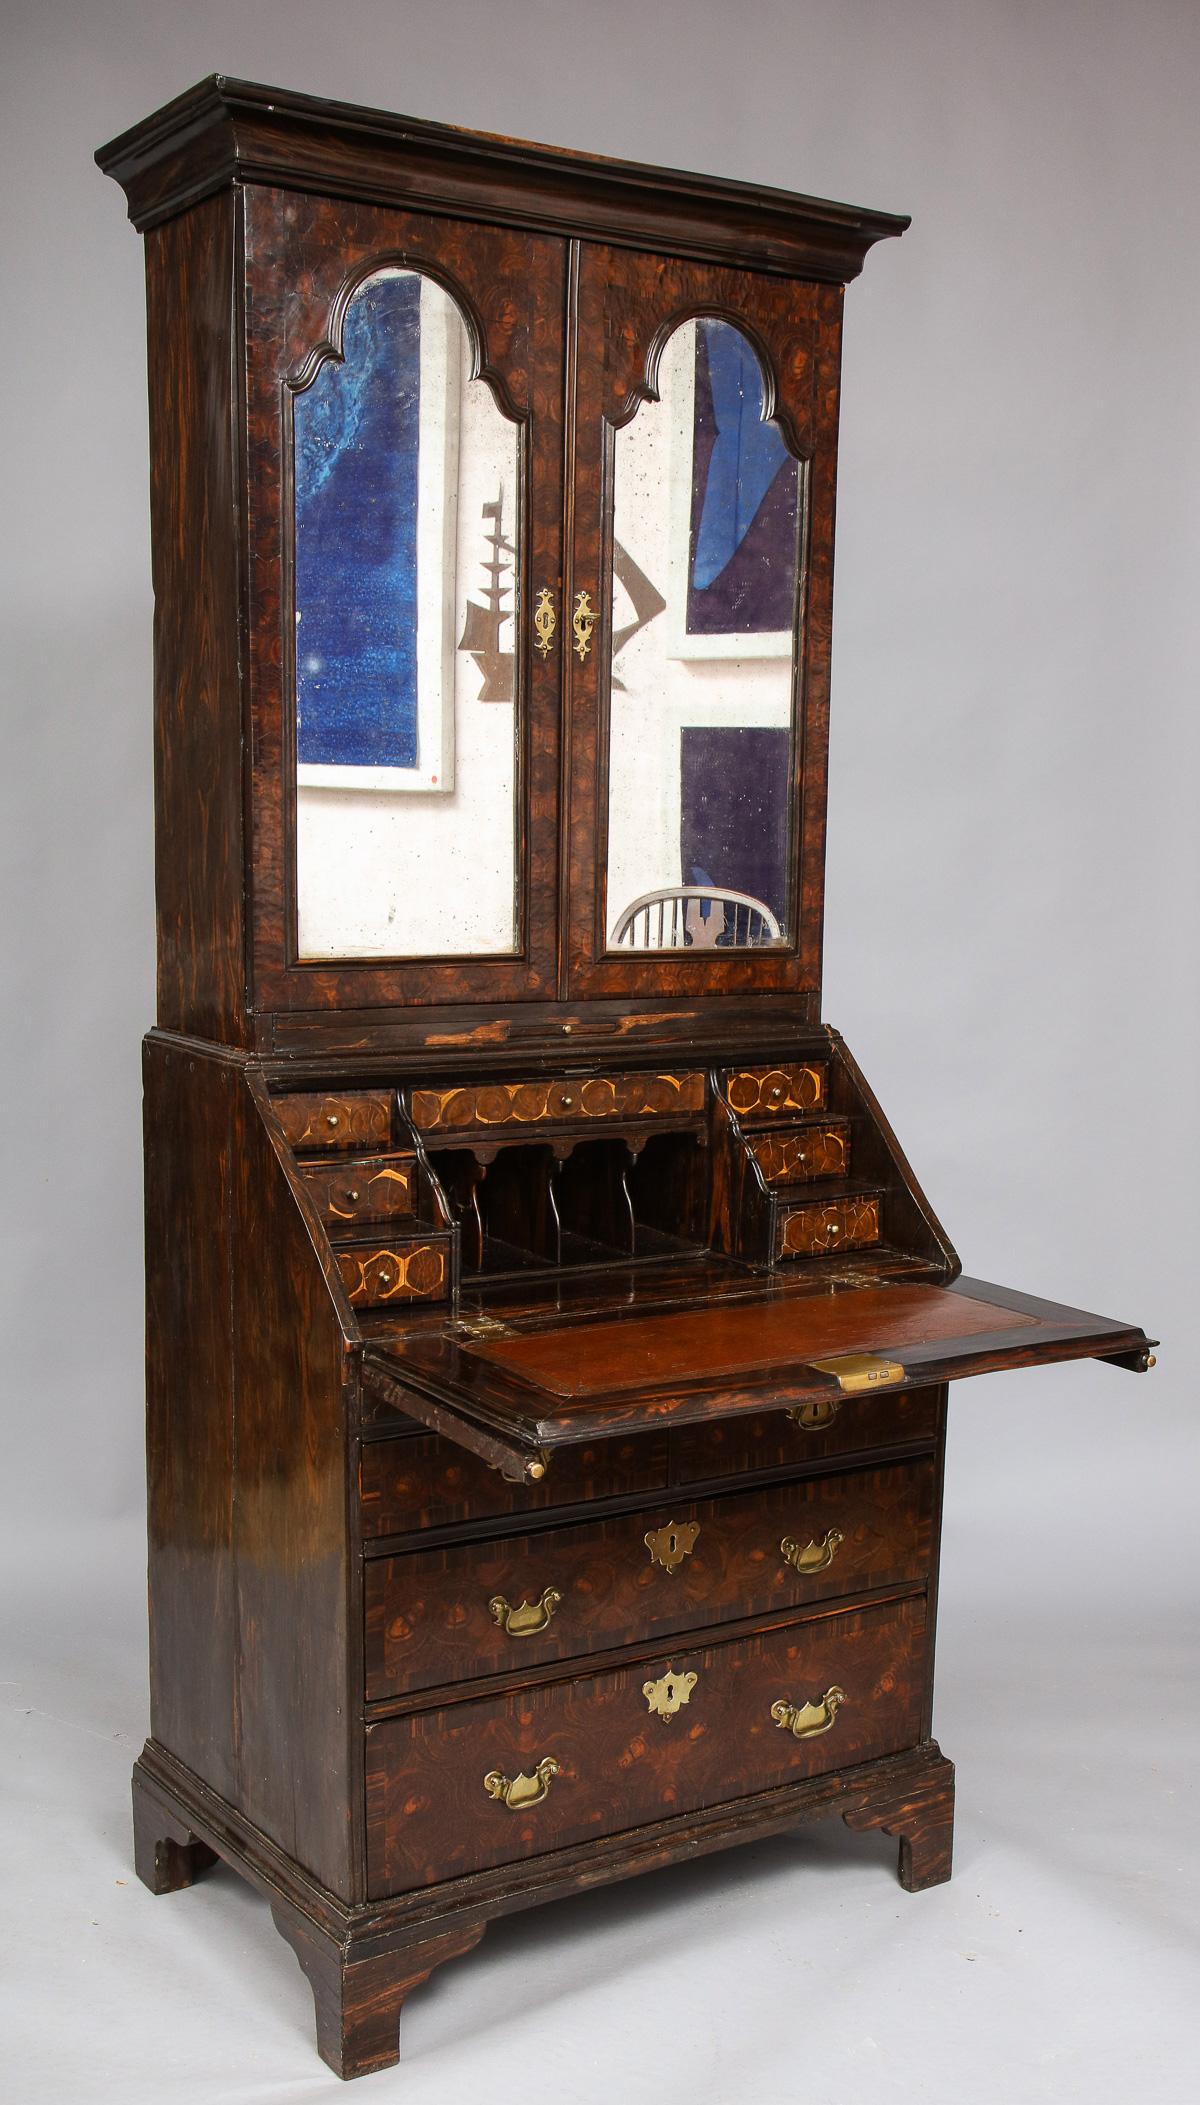 Early 18th Century British Colonial Ebony Bureau Bookcase For Sale